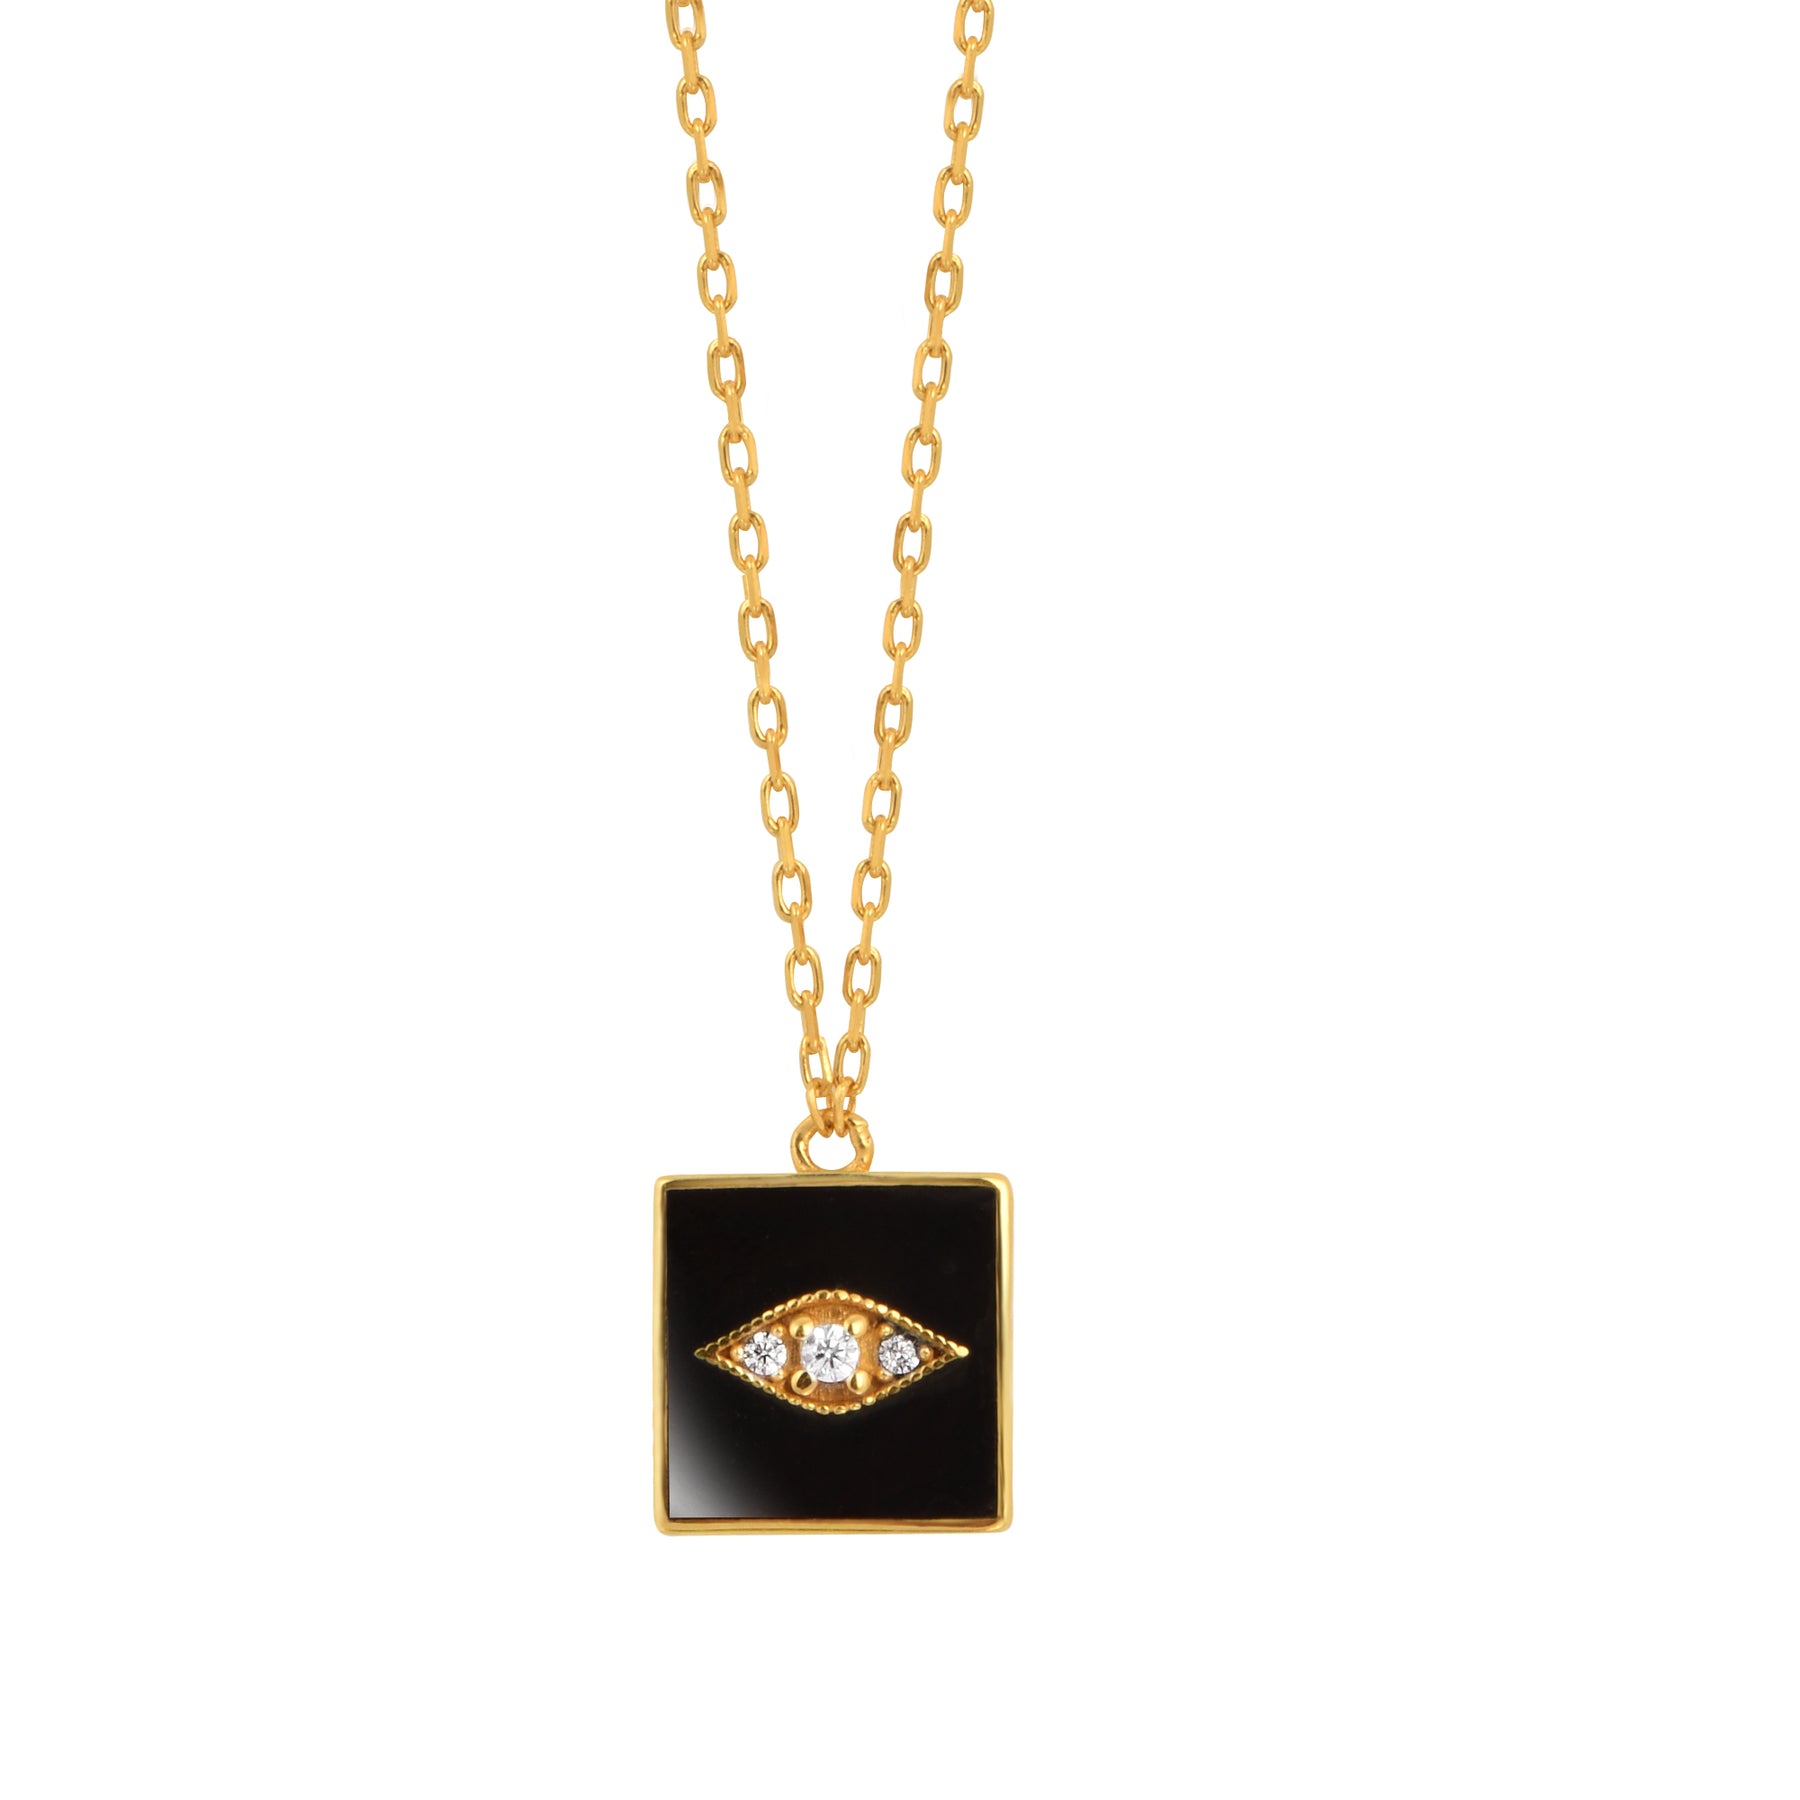 Black Square Evil Eye 24K Gold Vermeil Necklace